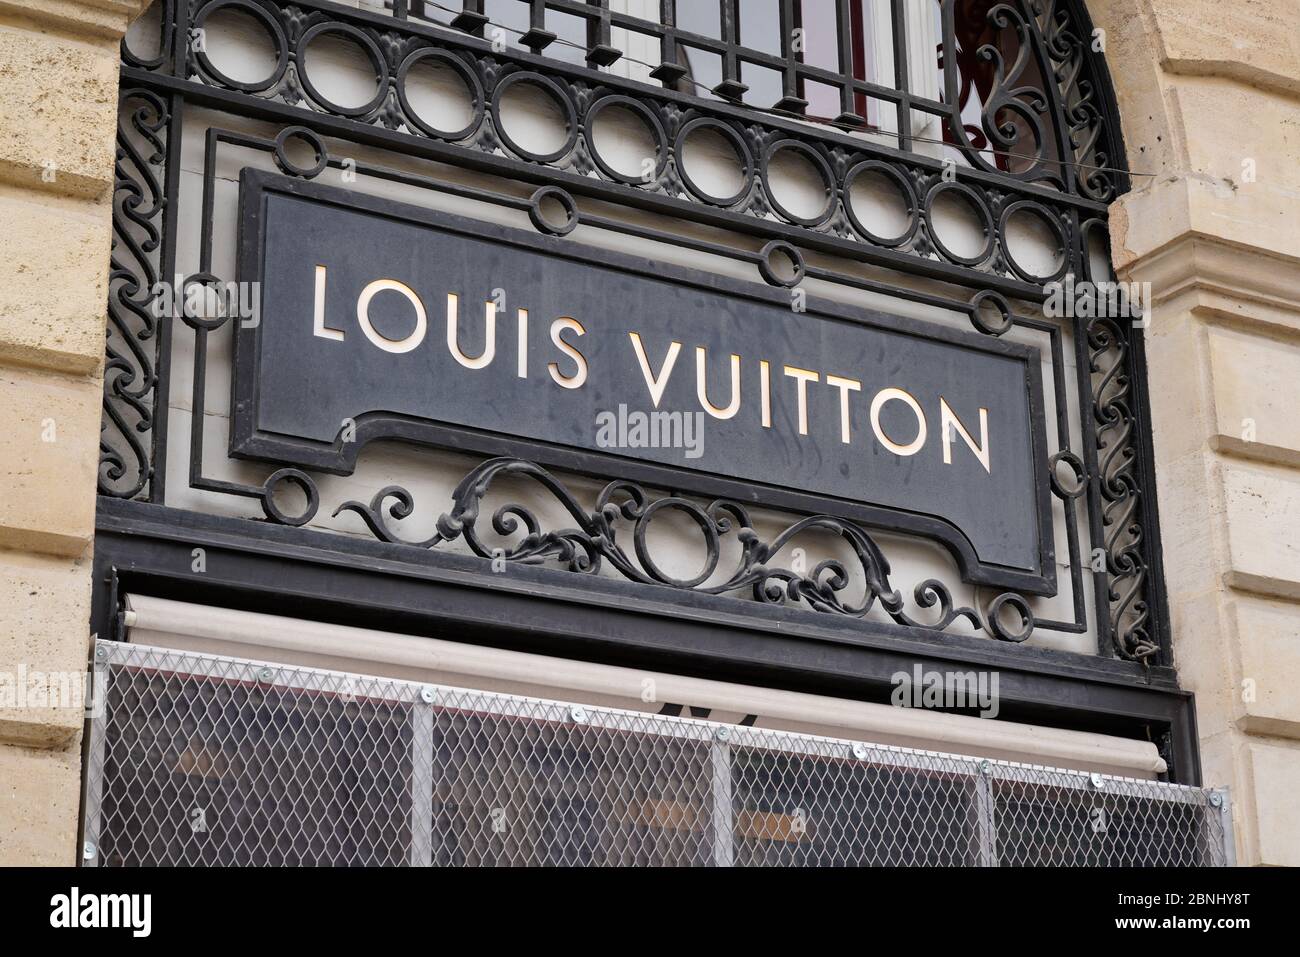 Bordeaux , Aquitaine / France - 05 12 2020 : Louis Vuitton logo store sign  vintage text shop Luxury brand handbags and luggage Stock Photo - Alamy